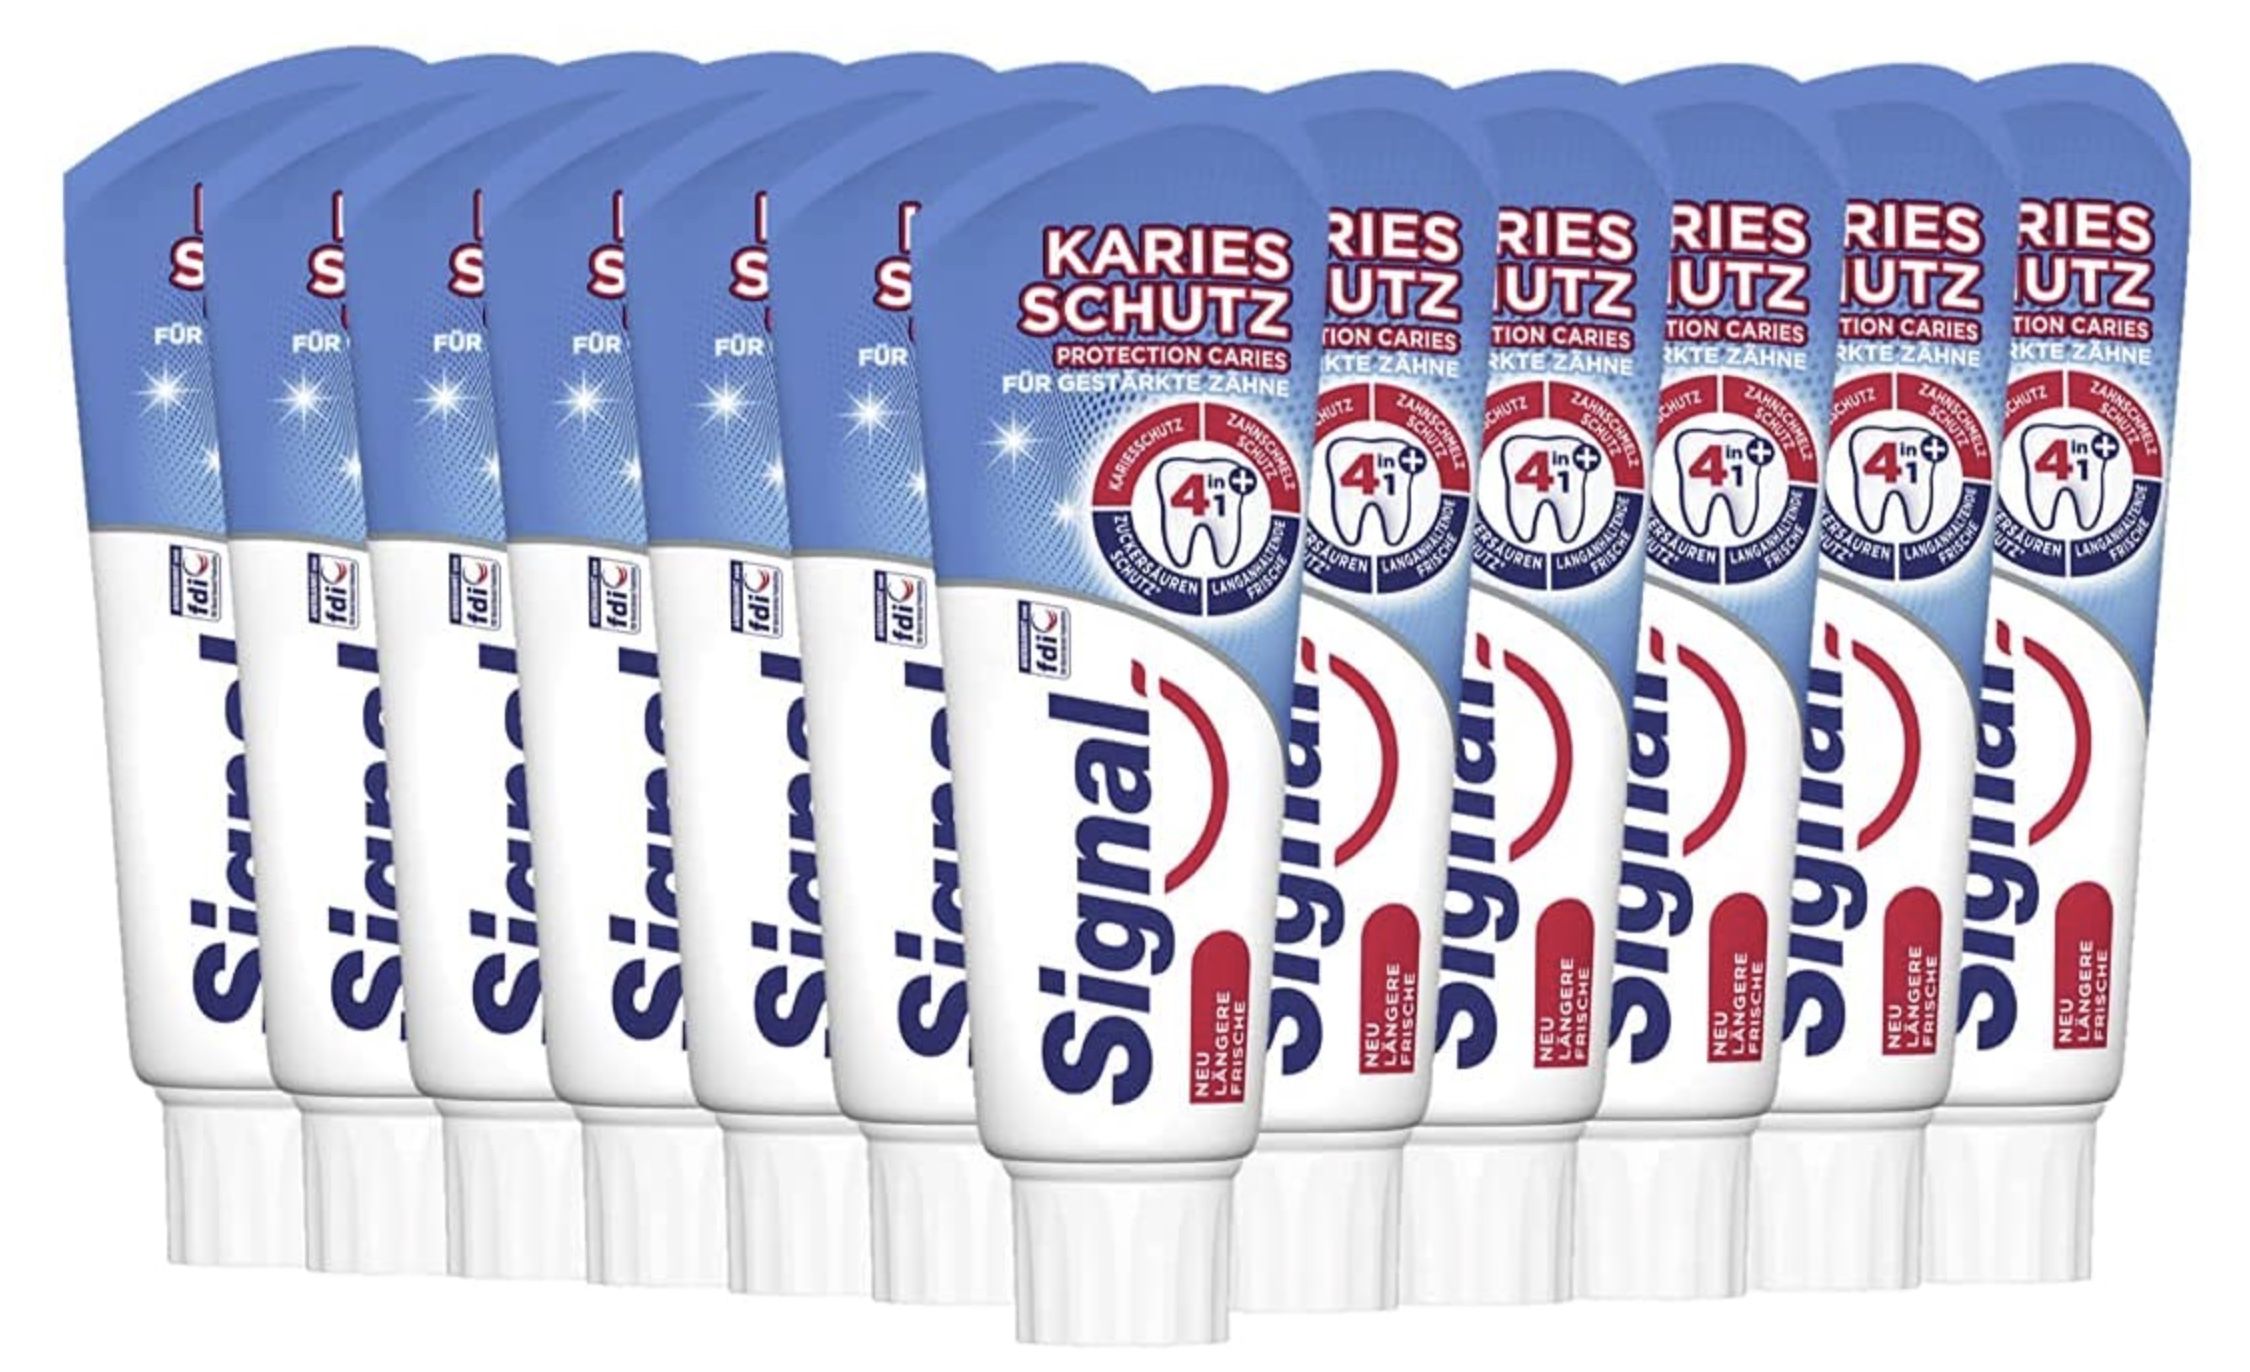 12er Pack Signal Kariesschutz Zahnpasta (je 75ml) für 6,72€ (statt 8,40€)   Prime Sparabo